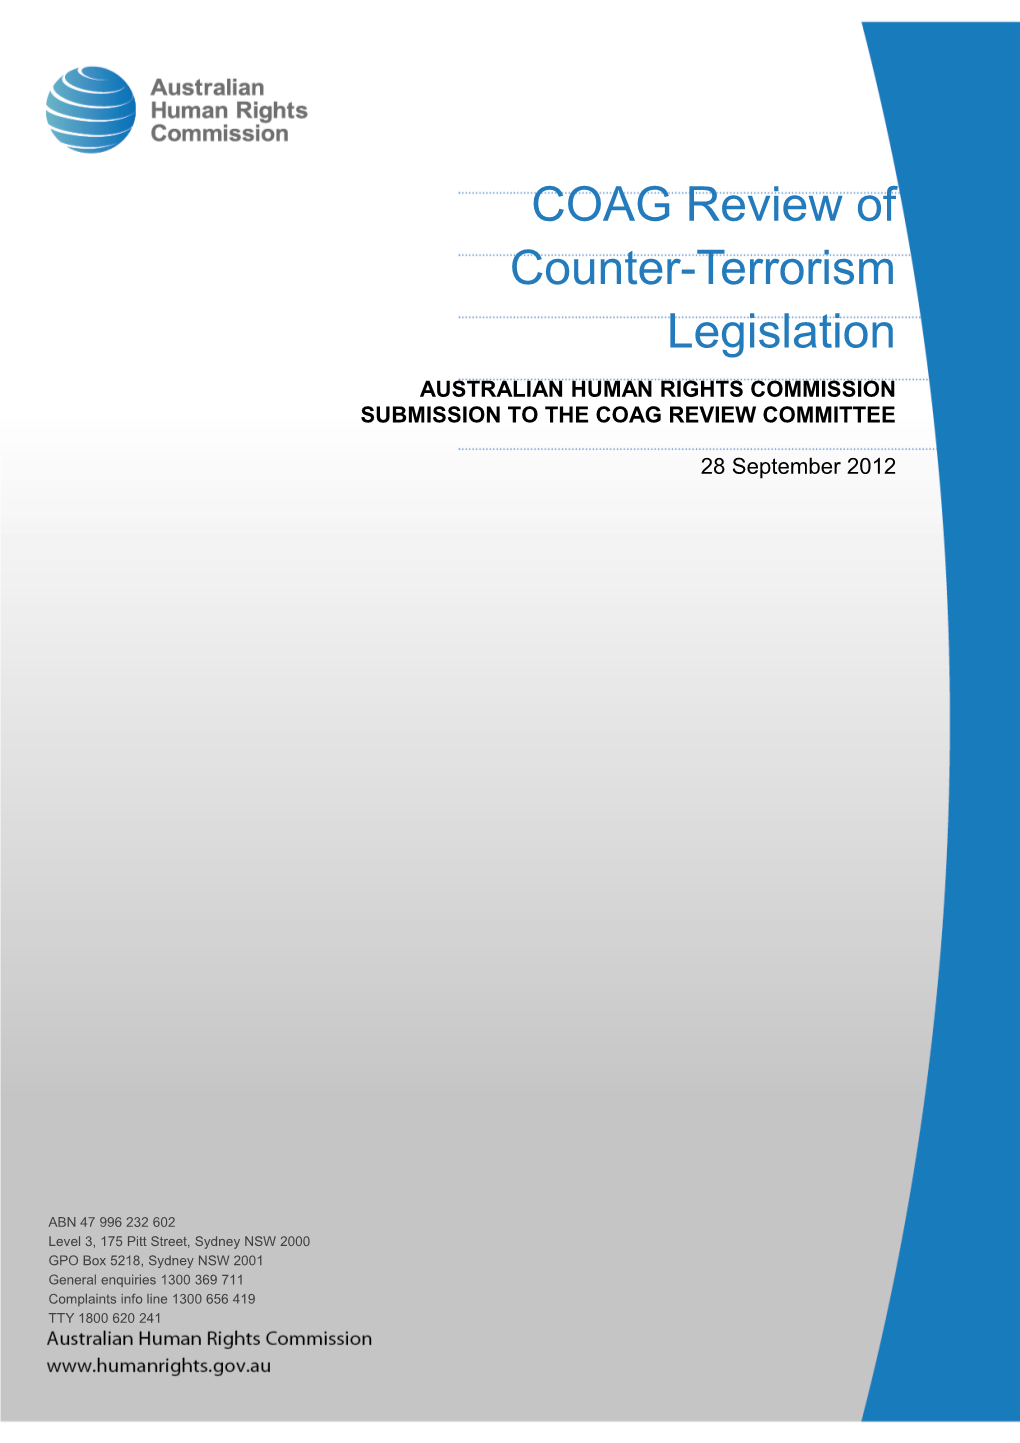 AHRC - COAG Review of Counter-Terrorism Legislation